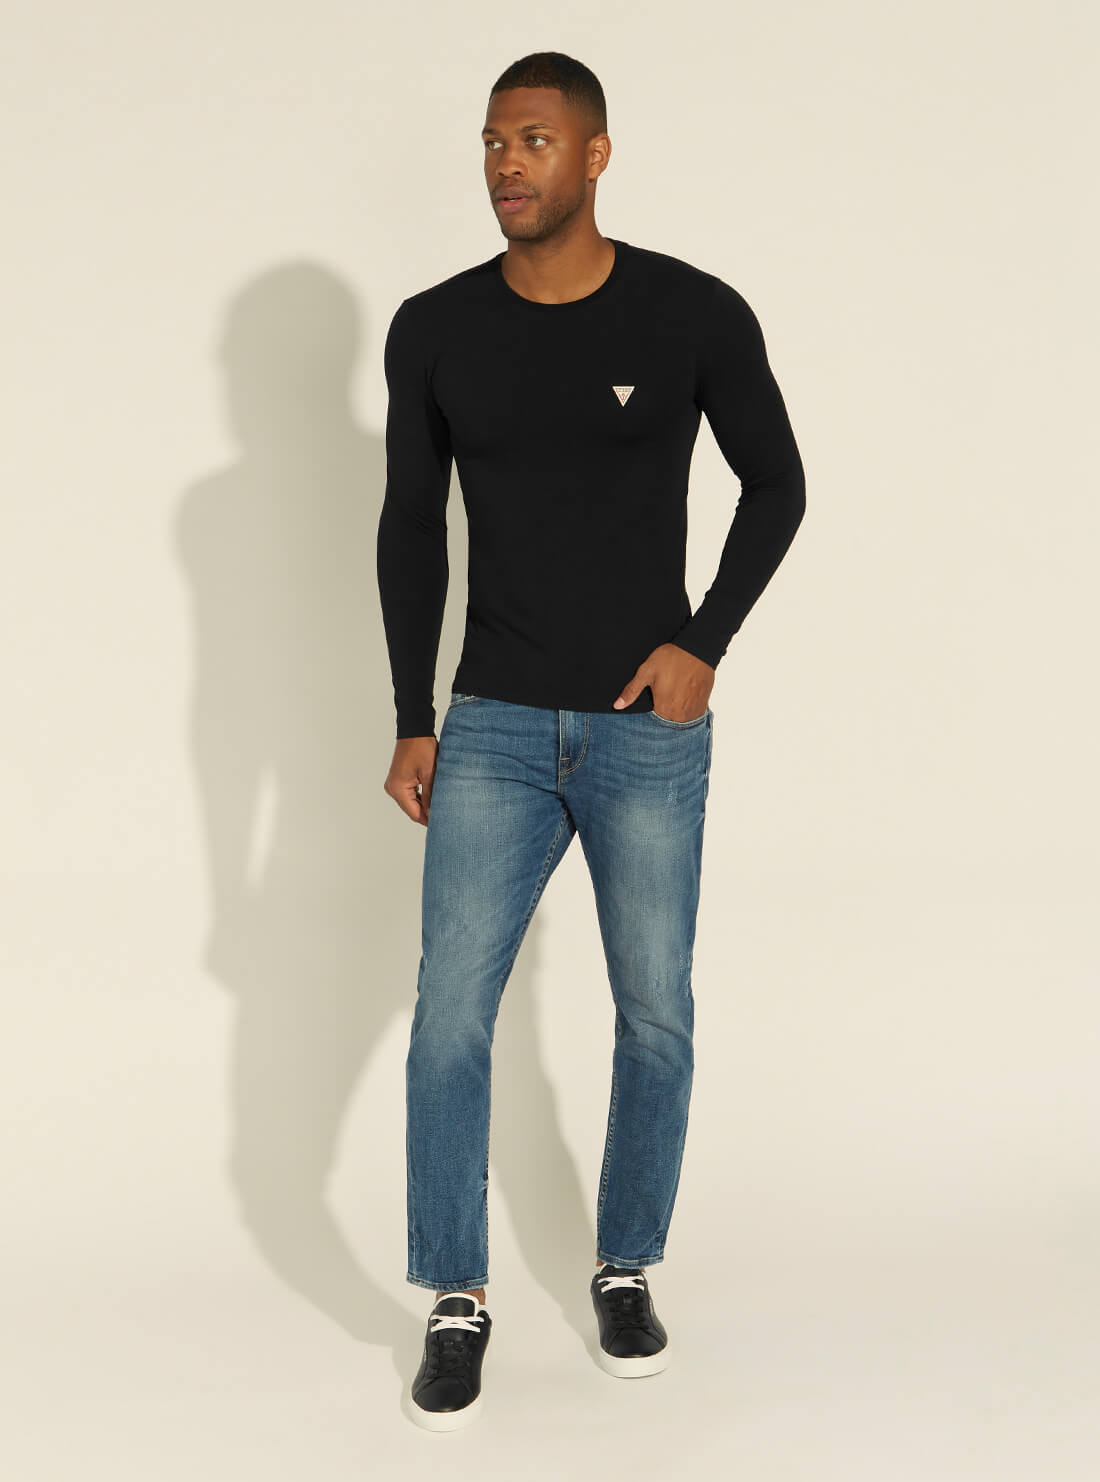 GUESS Mens Black Super Slim Long Sleeve T-Shirt M1RI28J1311 Full View